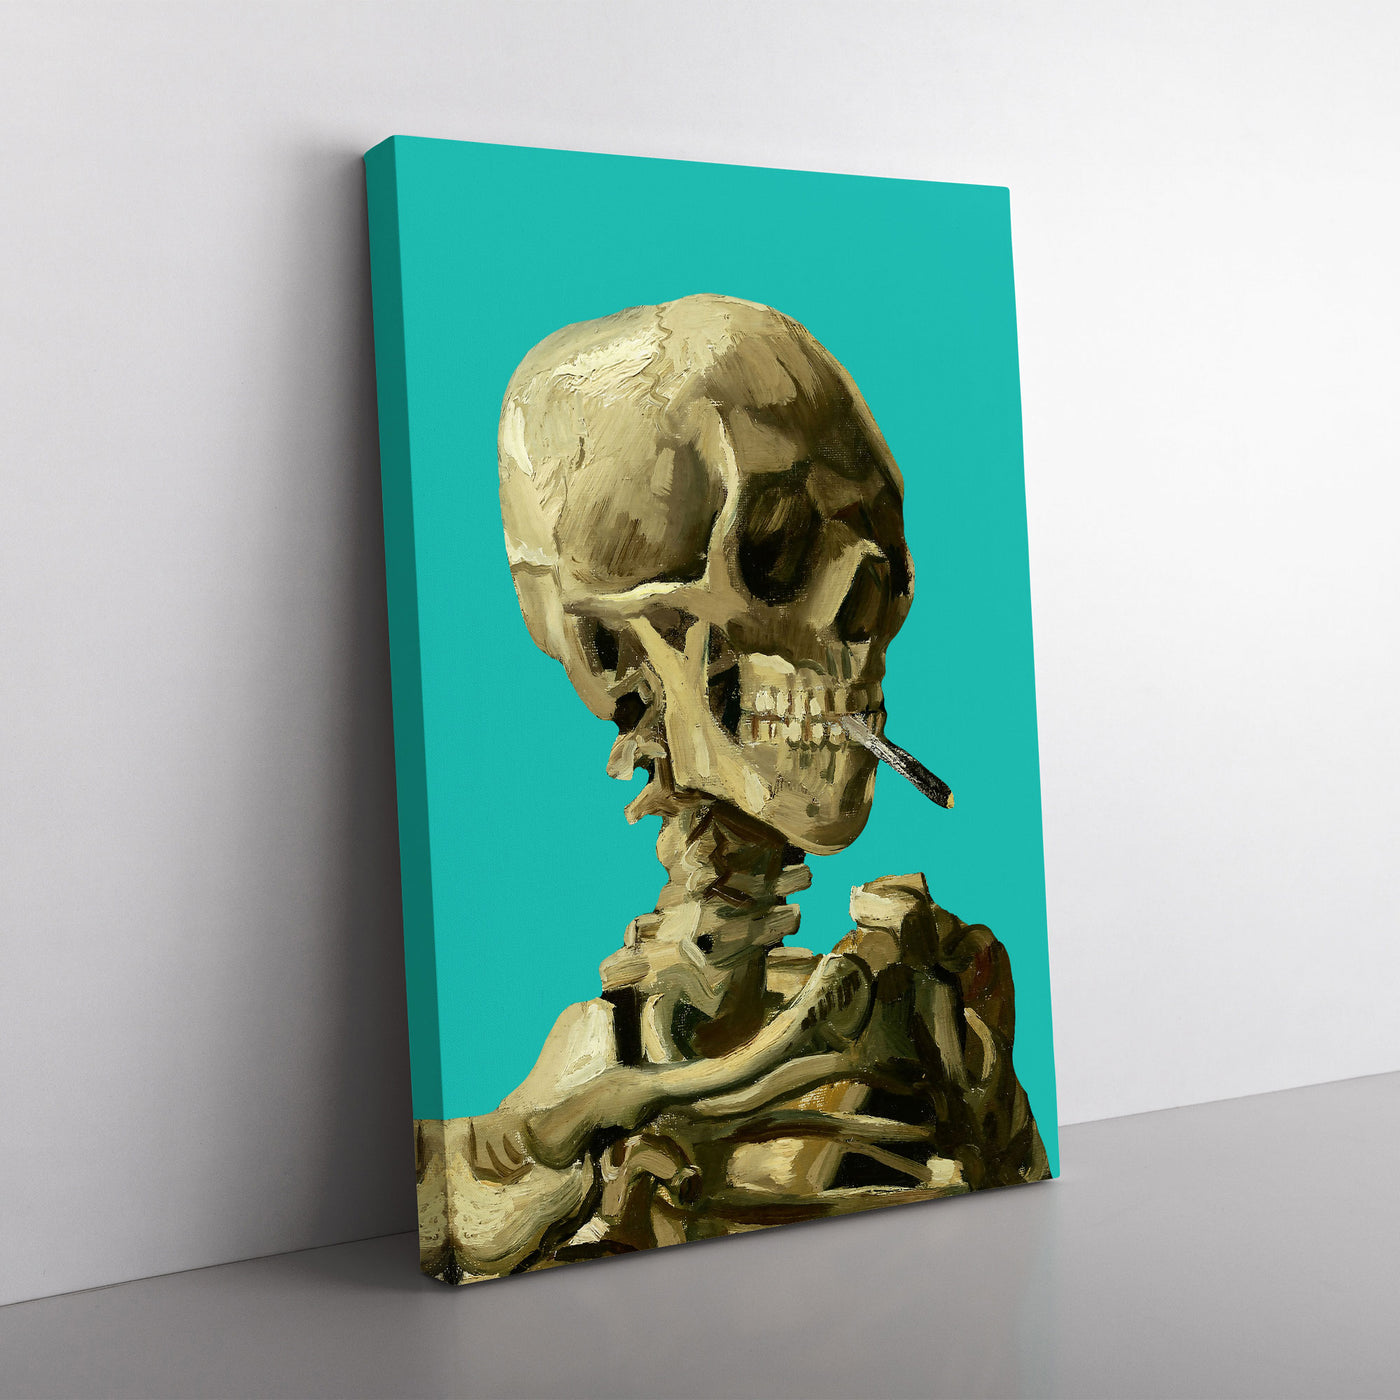 Teal Skull Of A Skeleton With Cigarette By Vincent Van Gogh